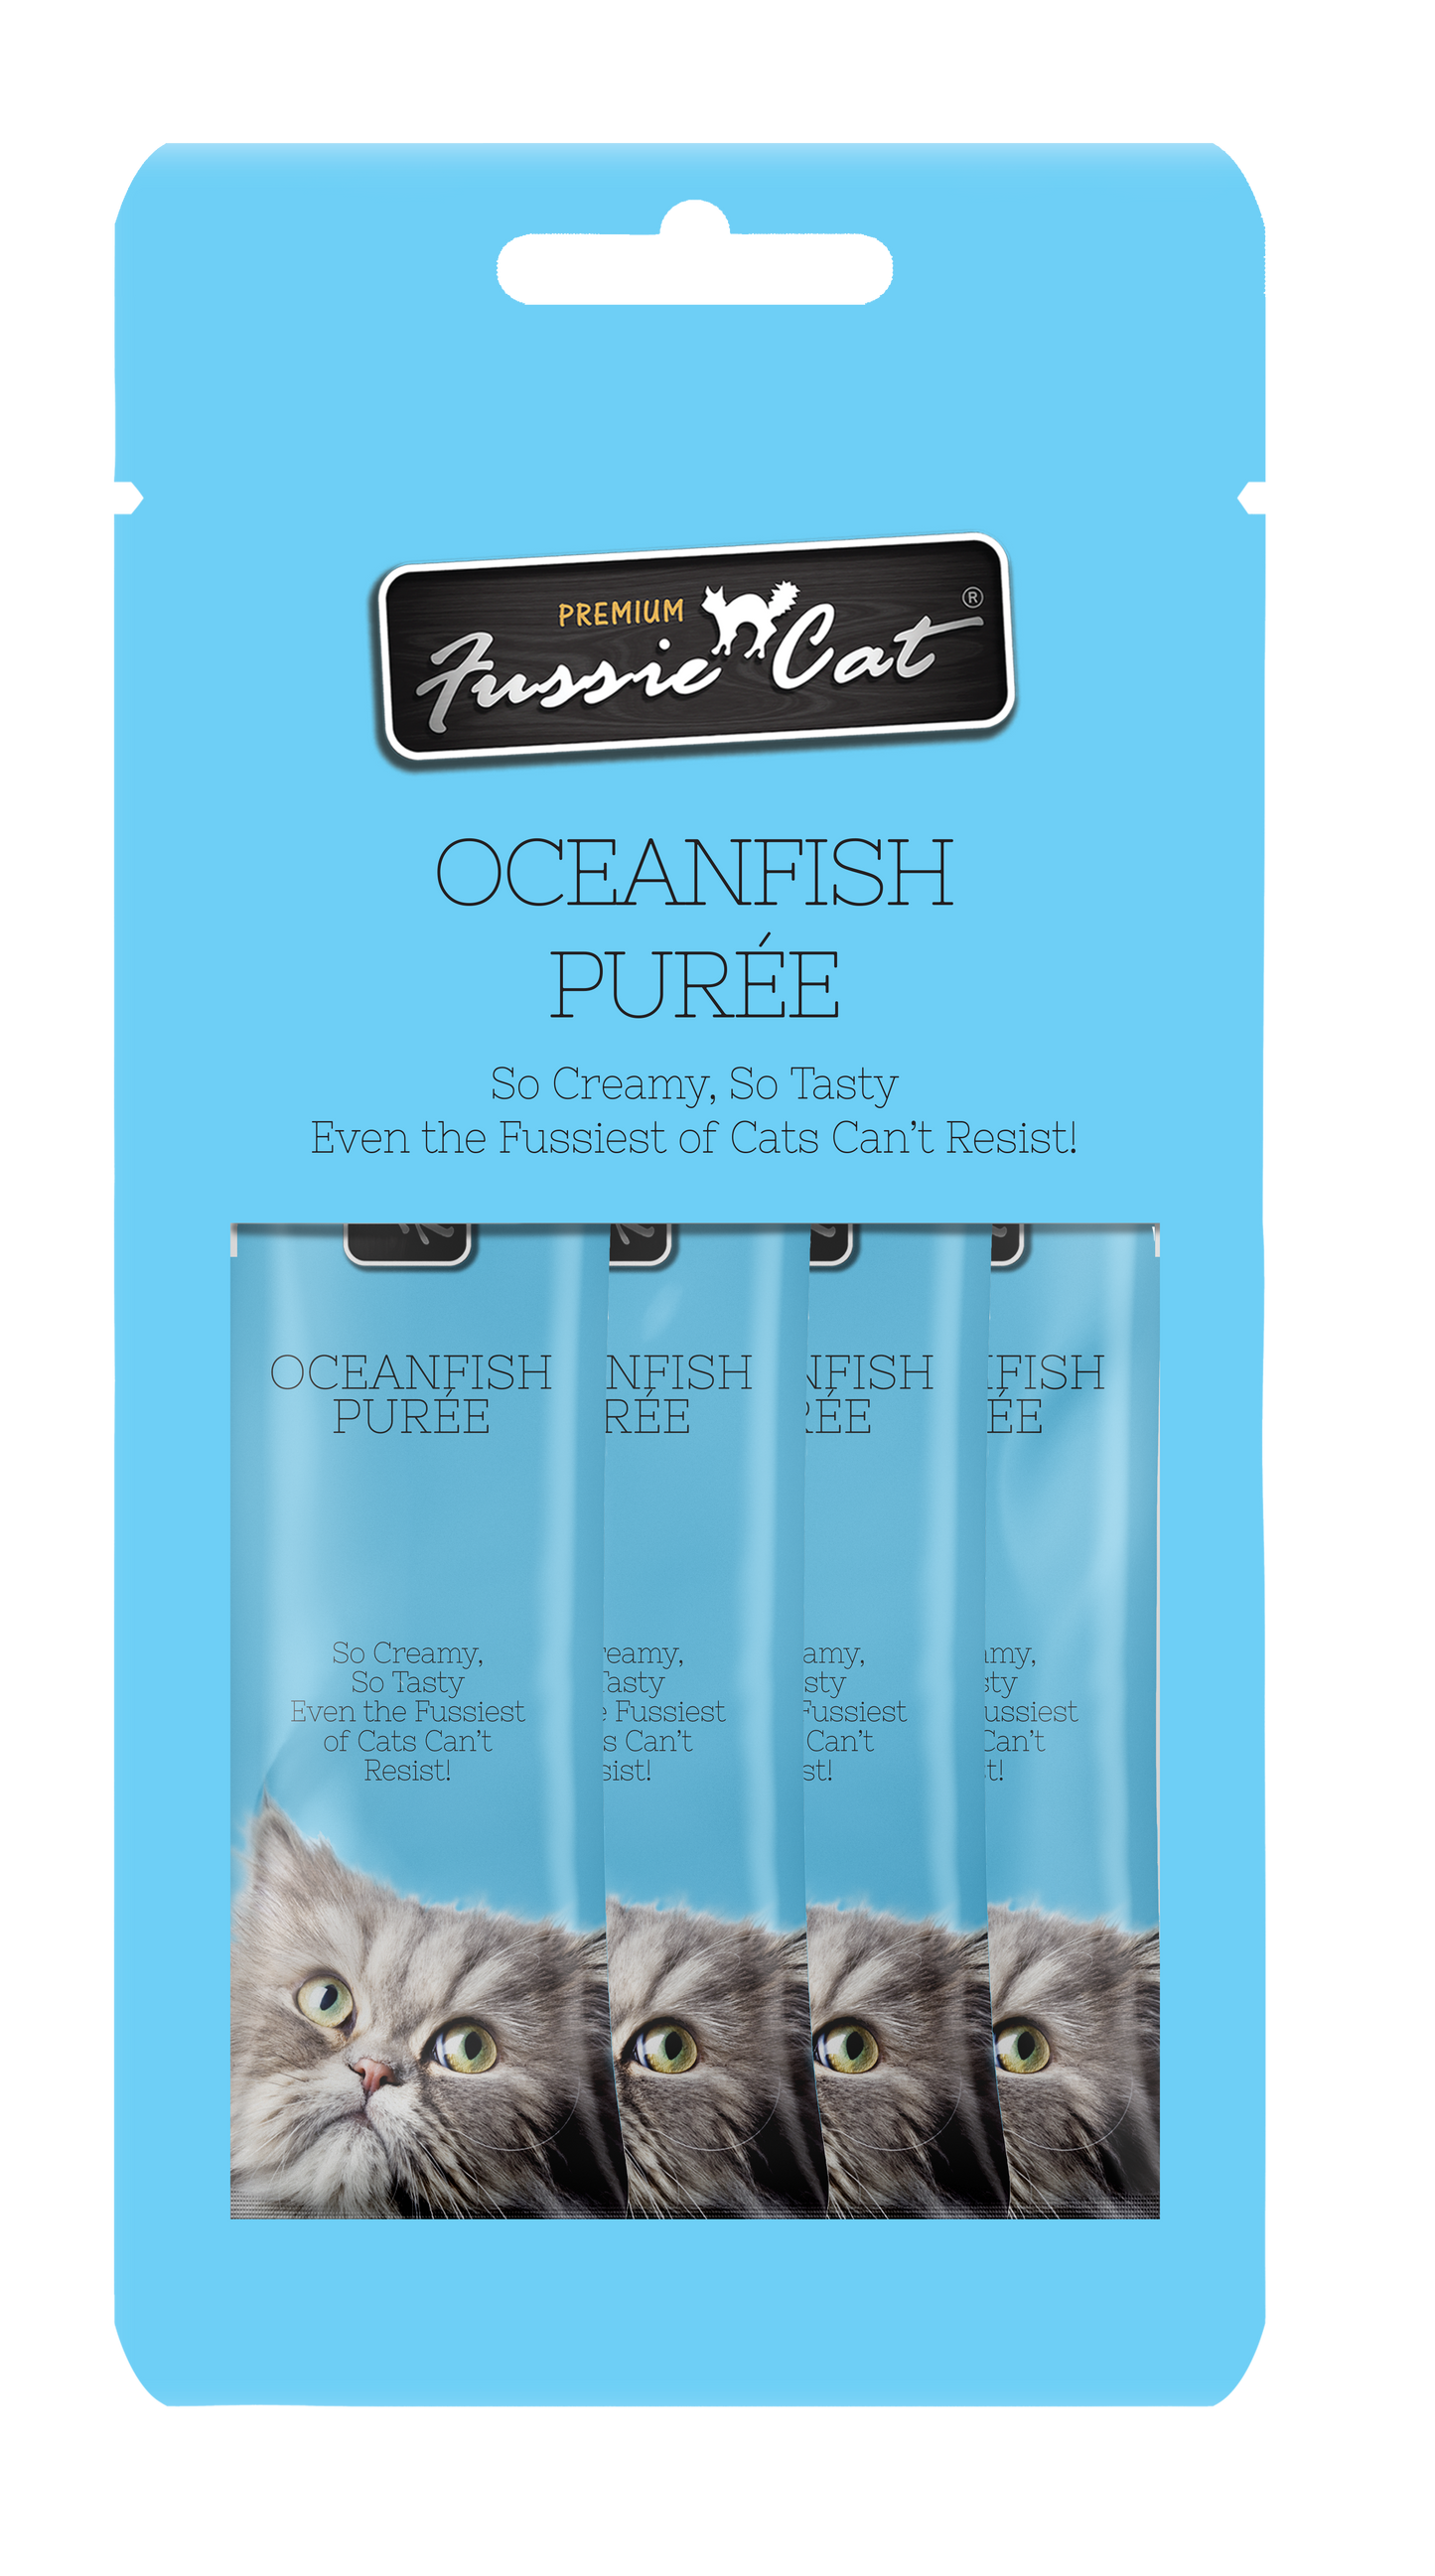 Fussie Cat Oceanfish Purée 0.5-oz, 4-Pack, Cat Treat